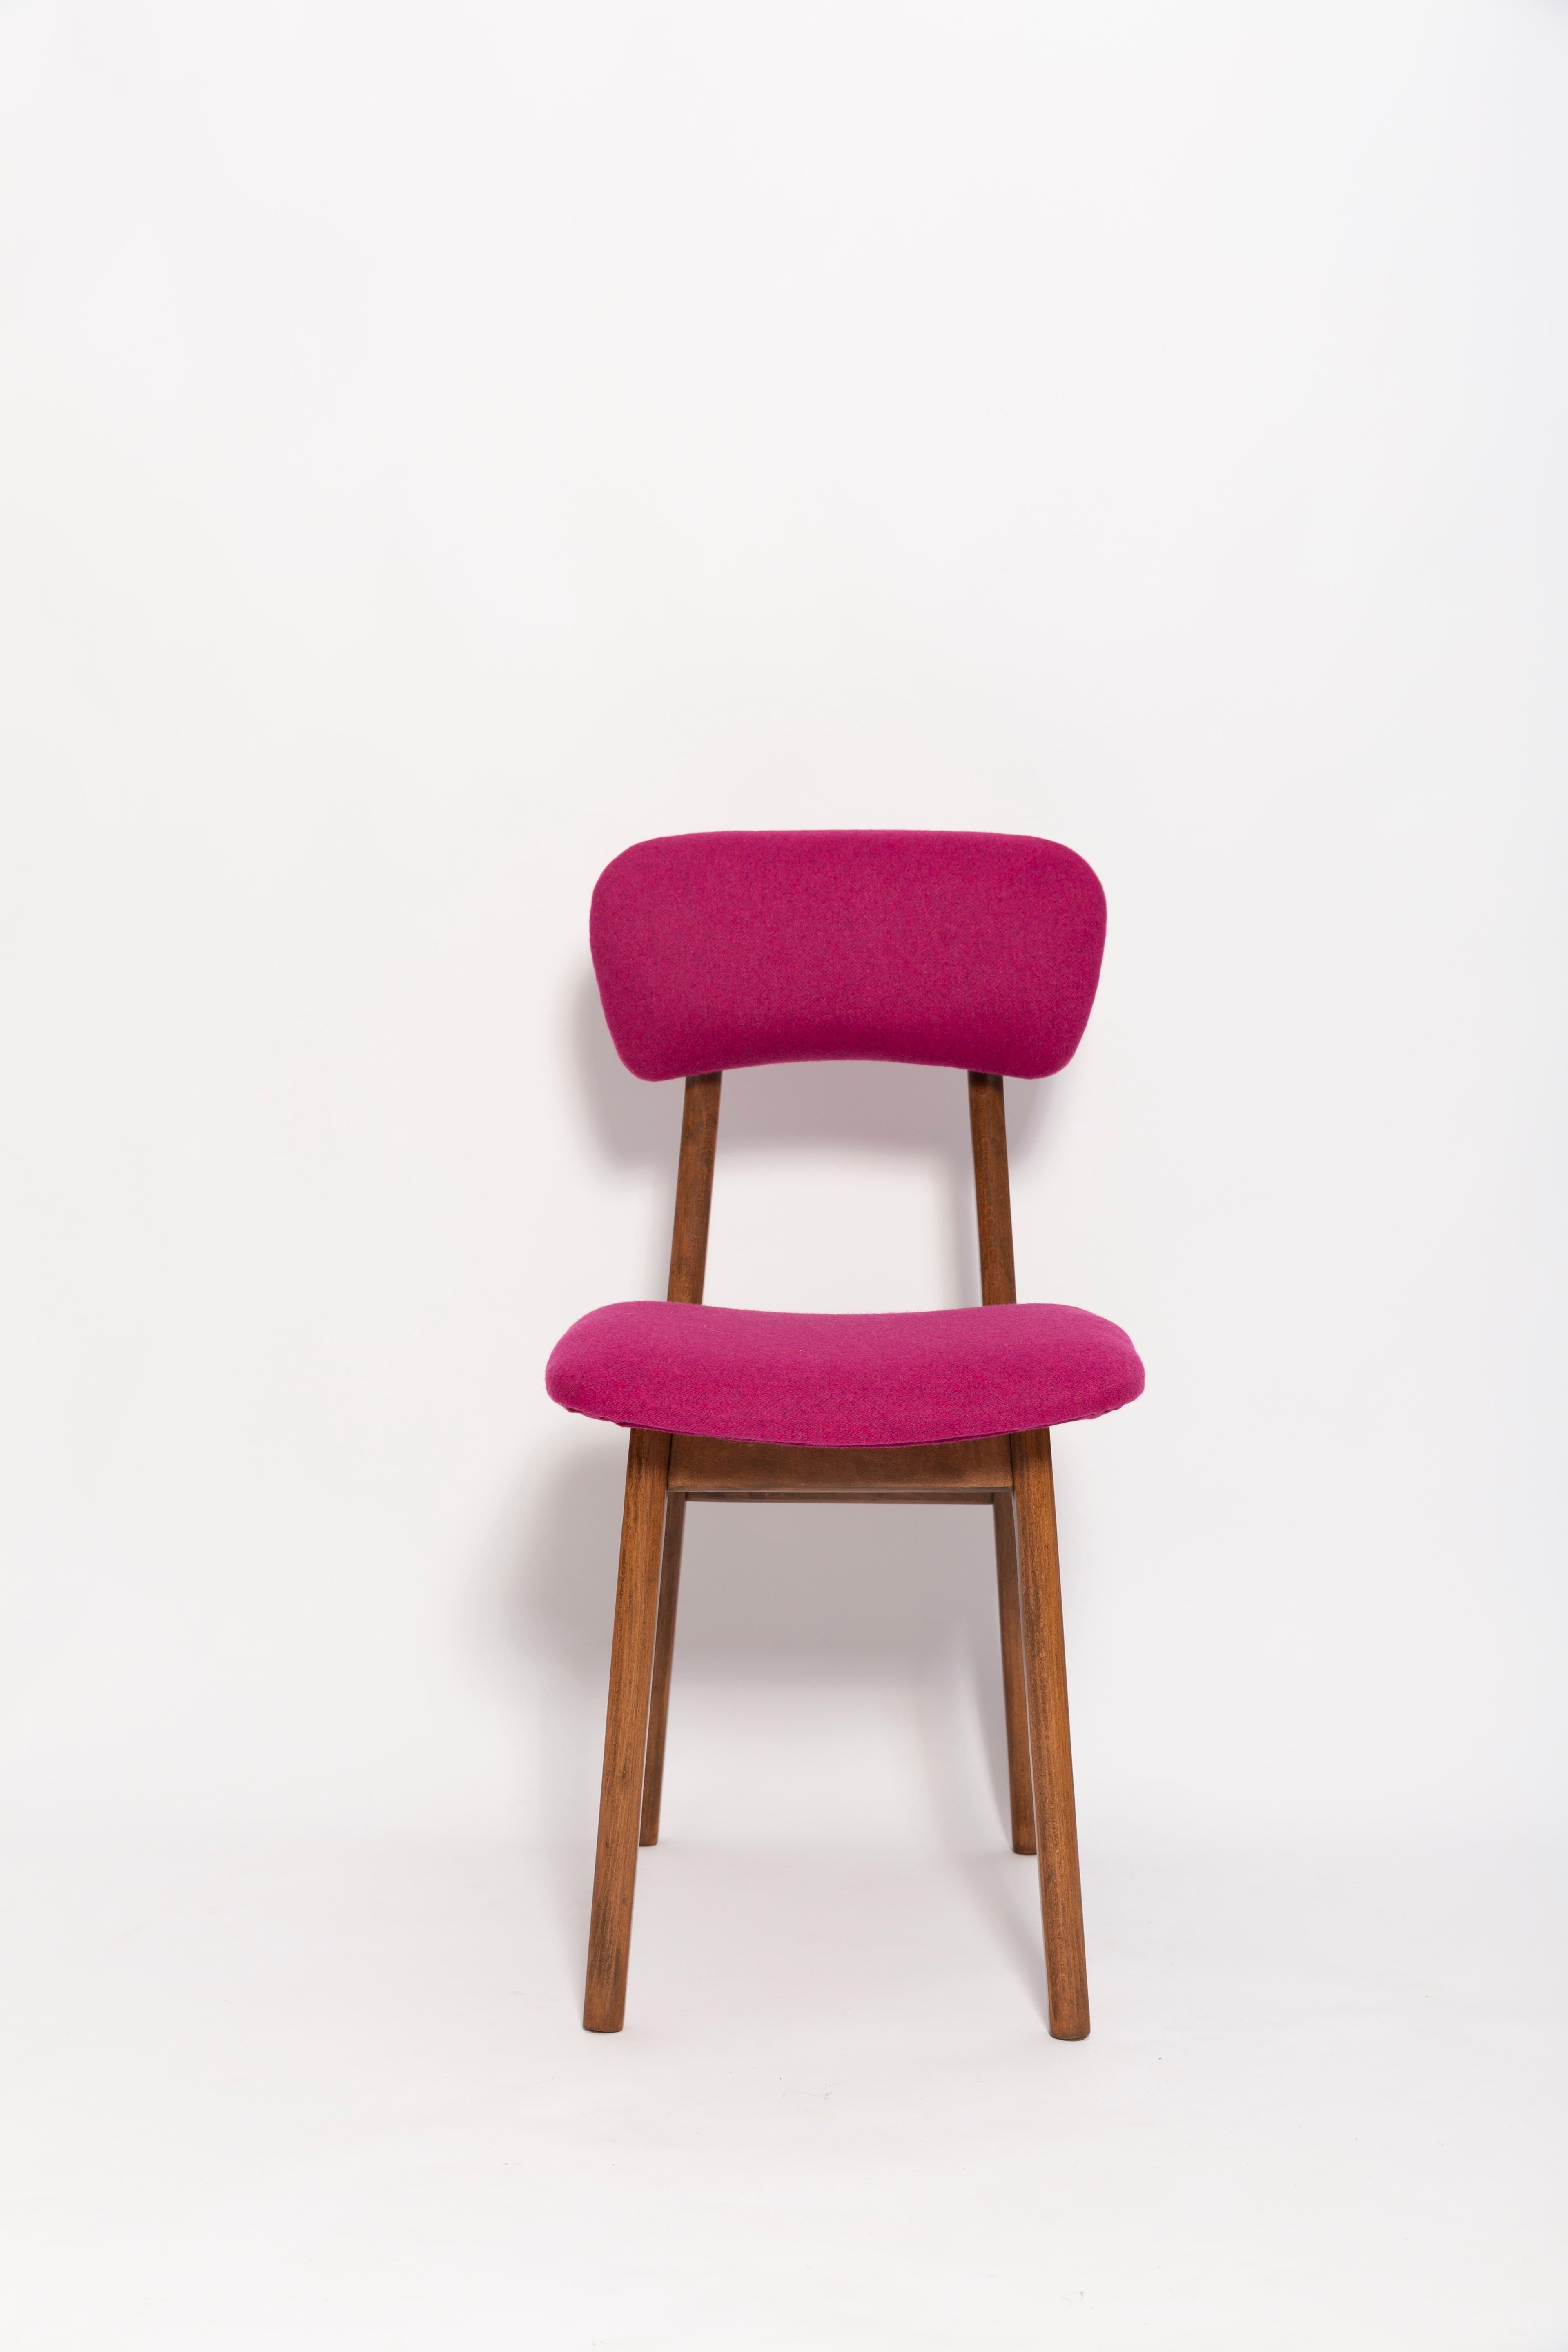 Polish Set of Six Mid Century Fuchsia Pink Wool Chairs, Rajmund Halas, Europe, 1960s For Sale